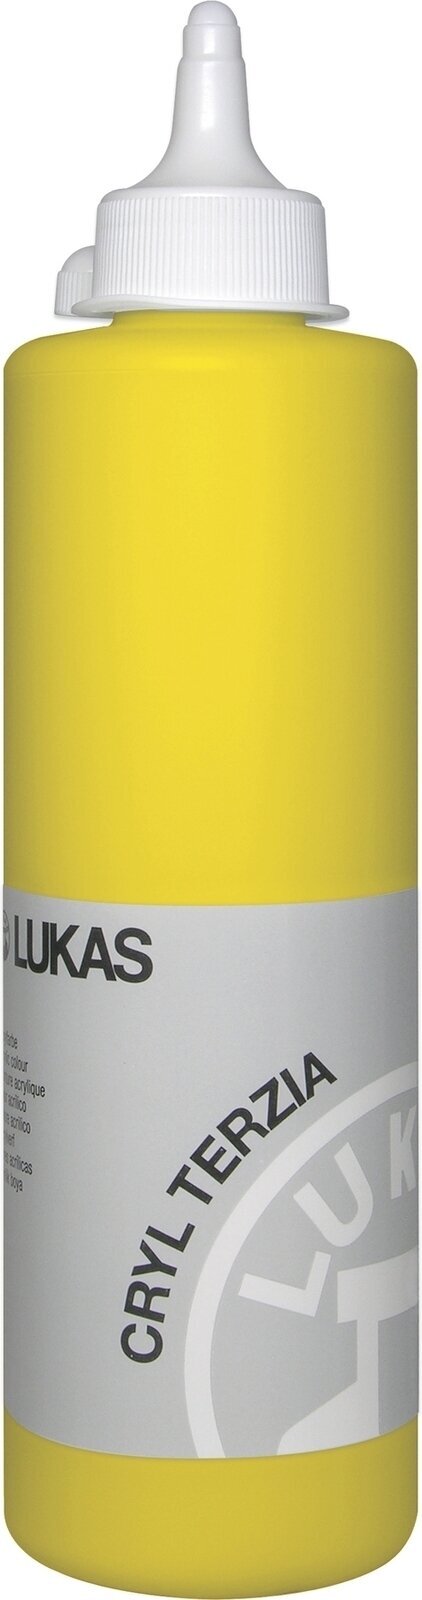 Acrylverf Lukas Cryl Terzia Acrylic Paint Plastic Bottle Acrylverf Primary Yellow 500 ml 1 stuk